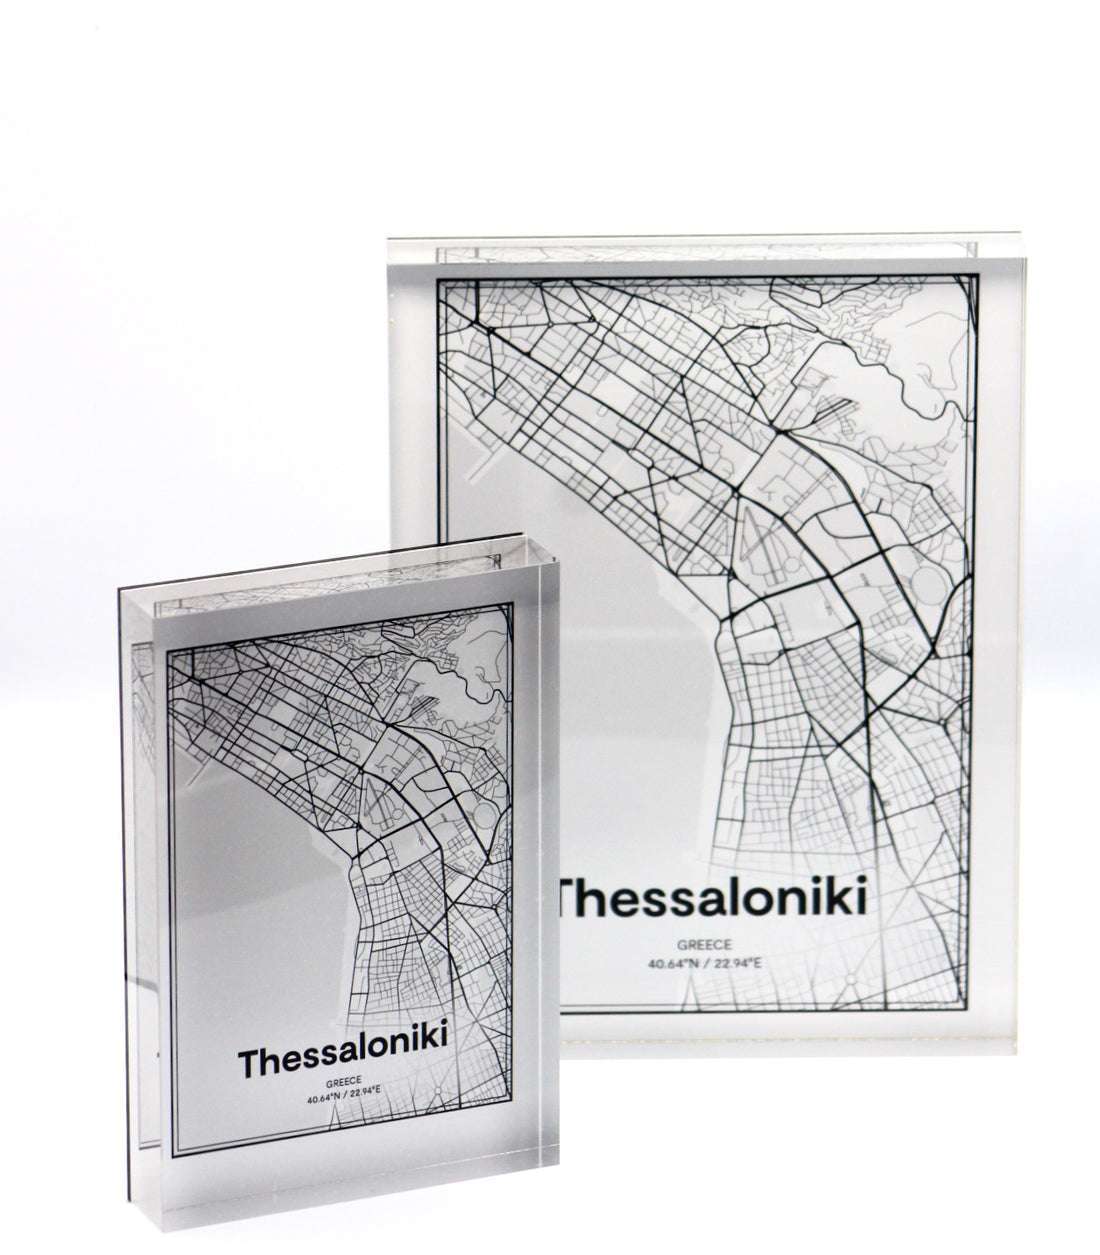 Thessaloniki map design object